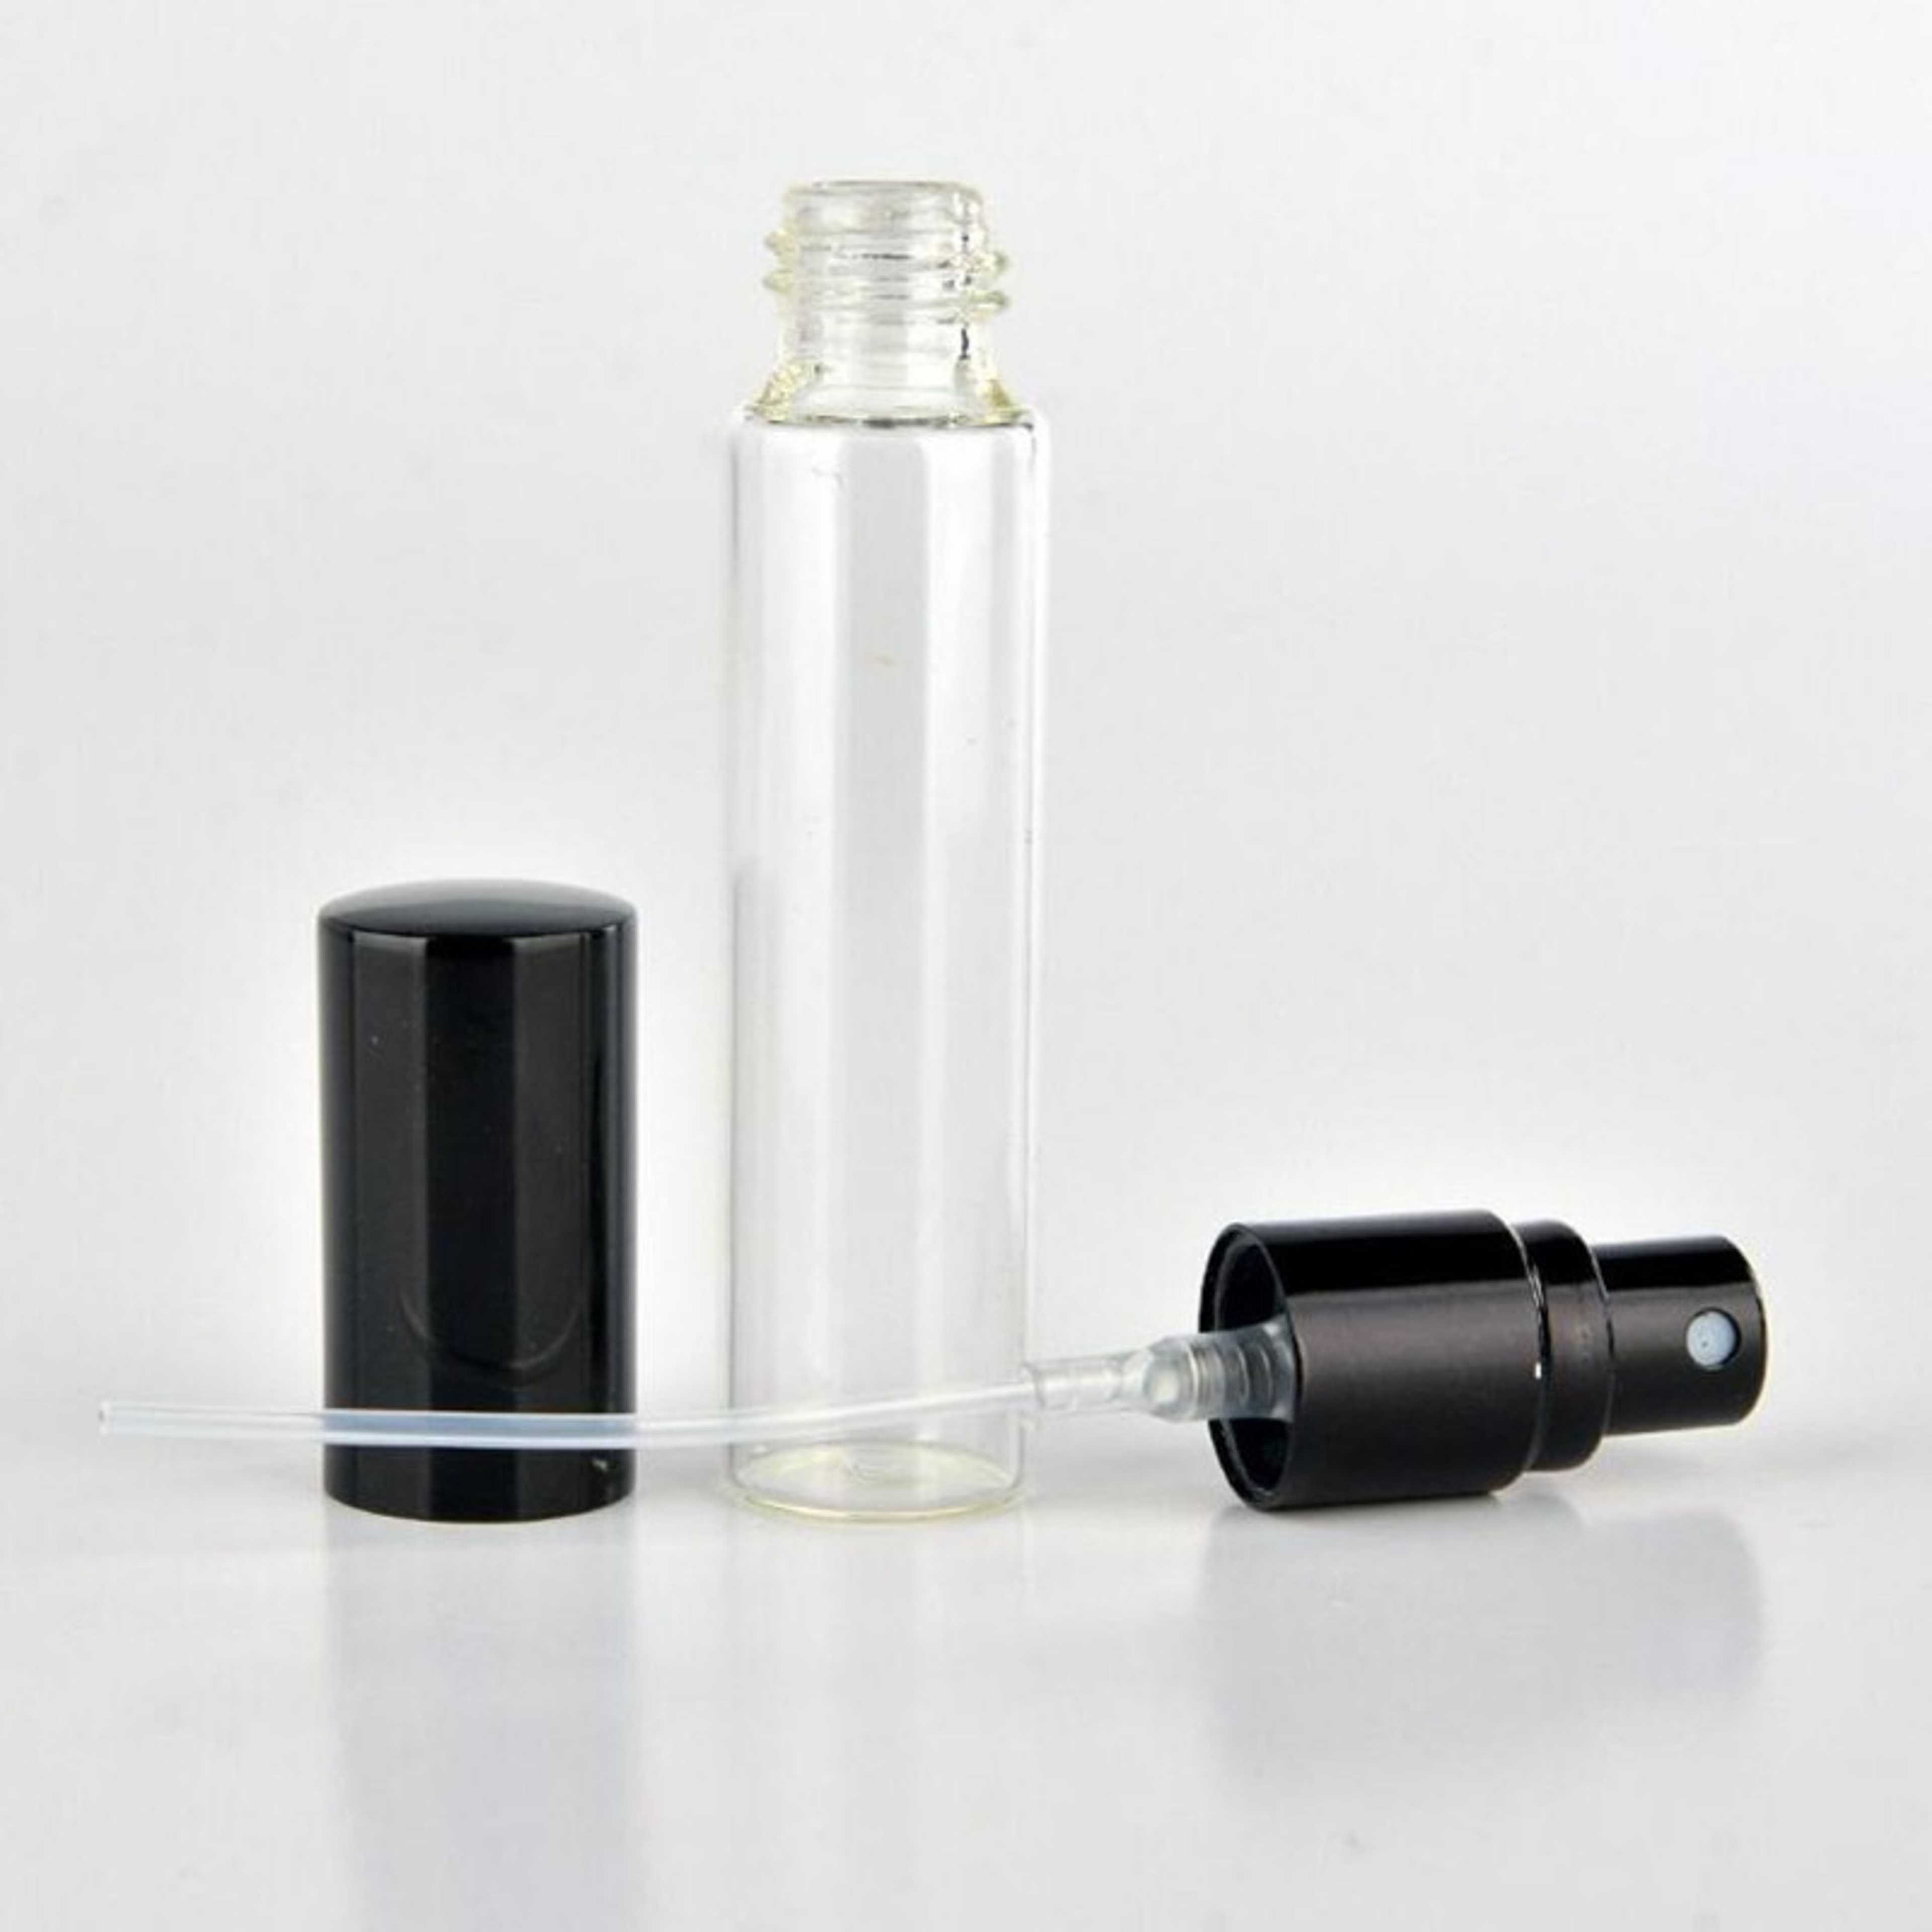 5ml Perfume Spray Bottles Refillable Mini Empty Travel Refillable Glass Bottles  Pack of 50 PCS (Size 5ml)